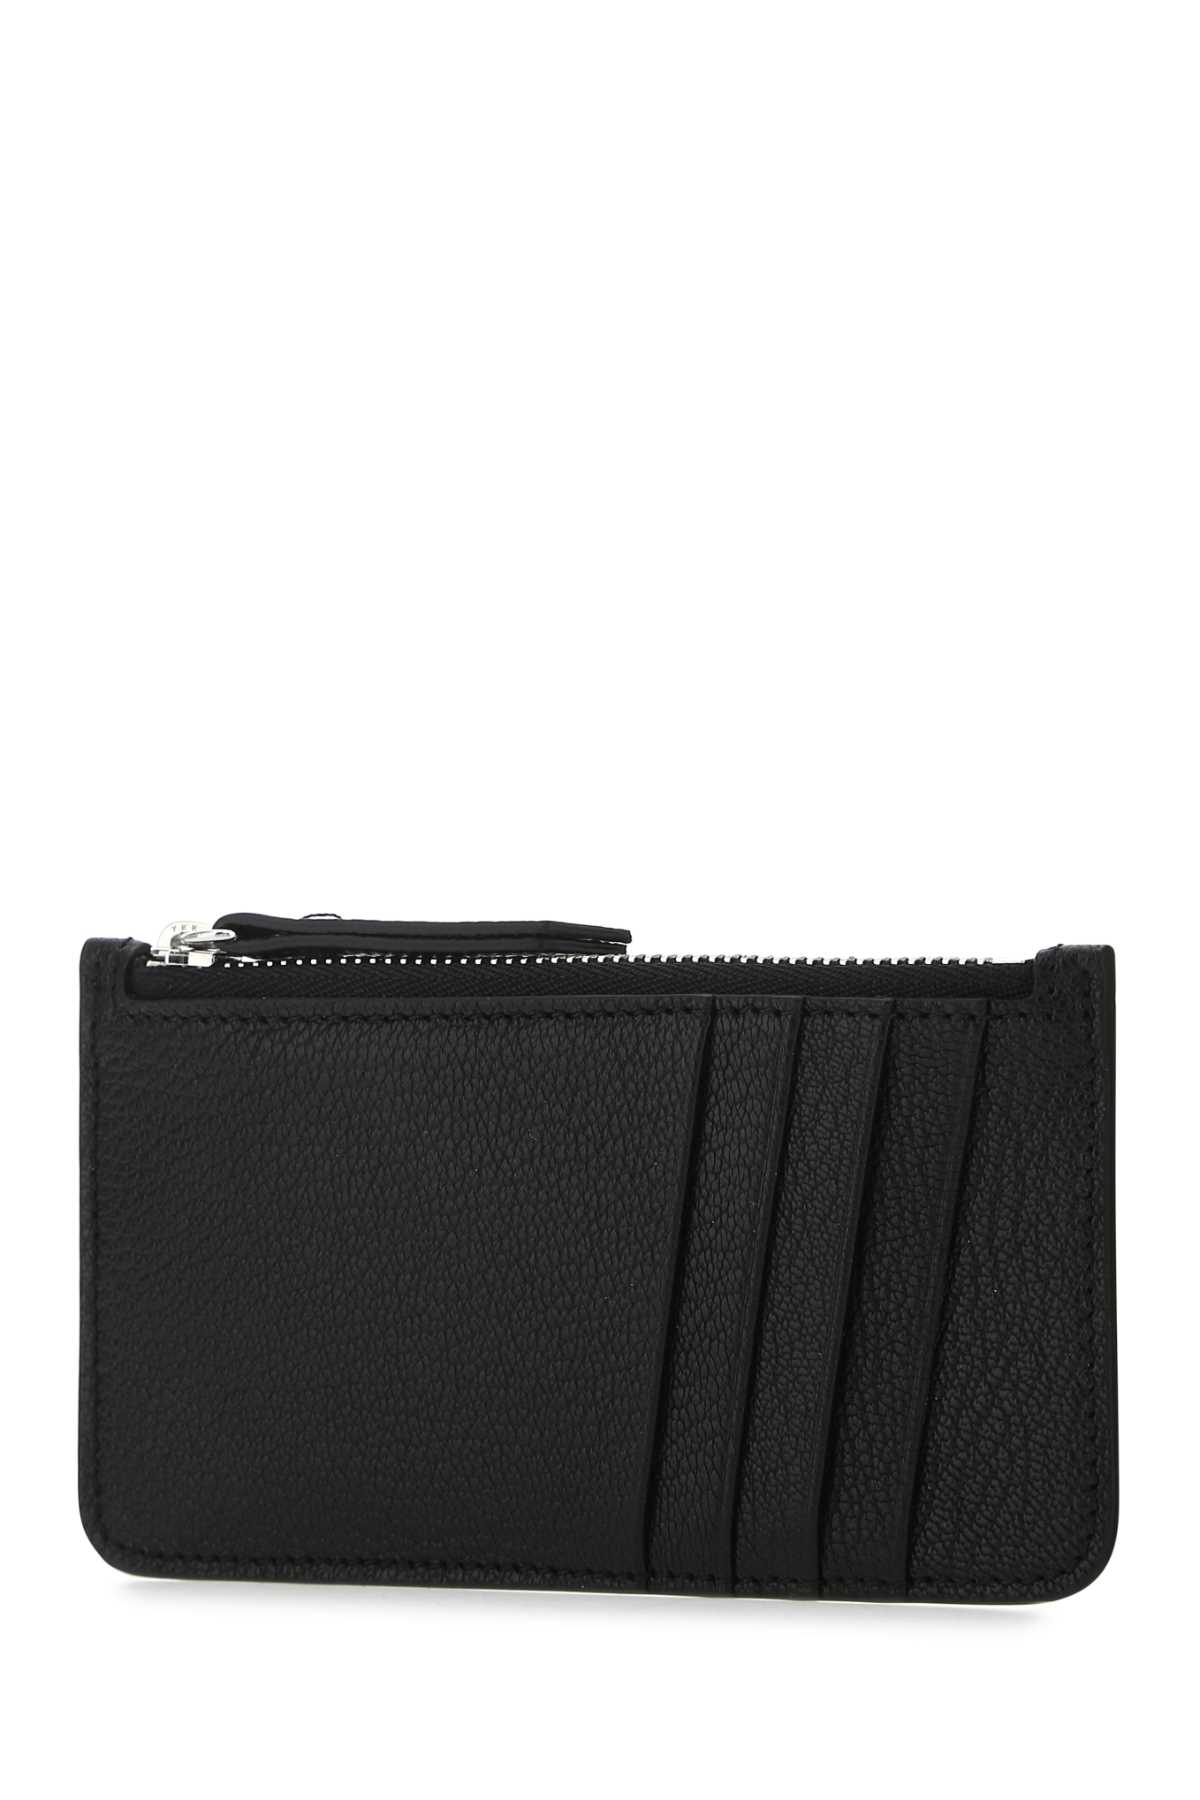 Maison Margiela Black Leather Card Holder In T8013